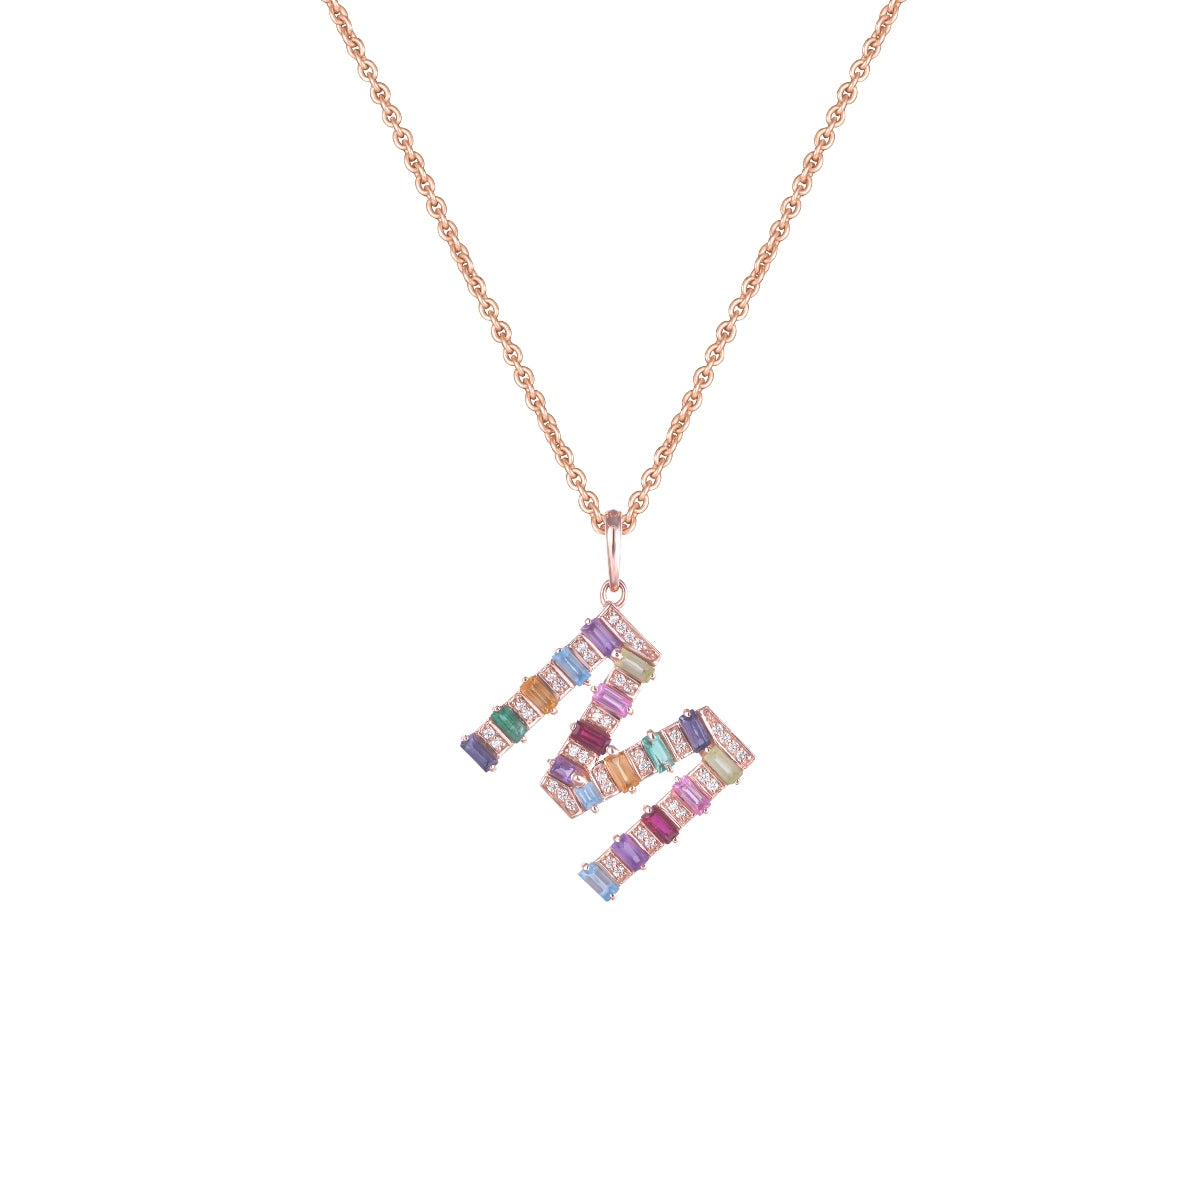 Small Personalised Multi-Coloured Chain Pendant